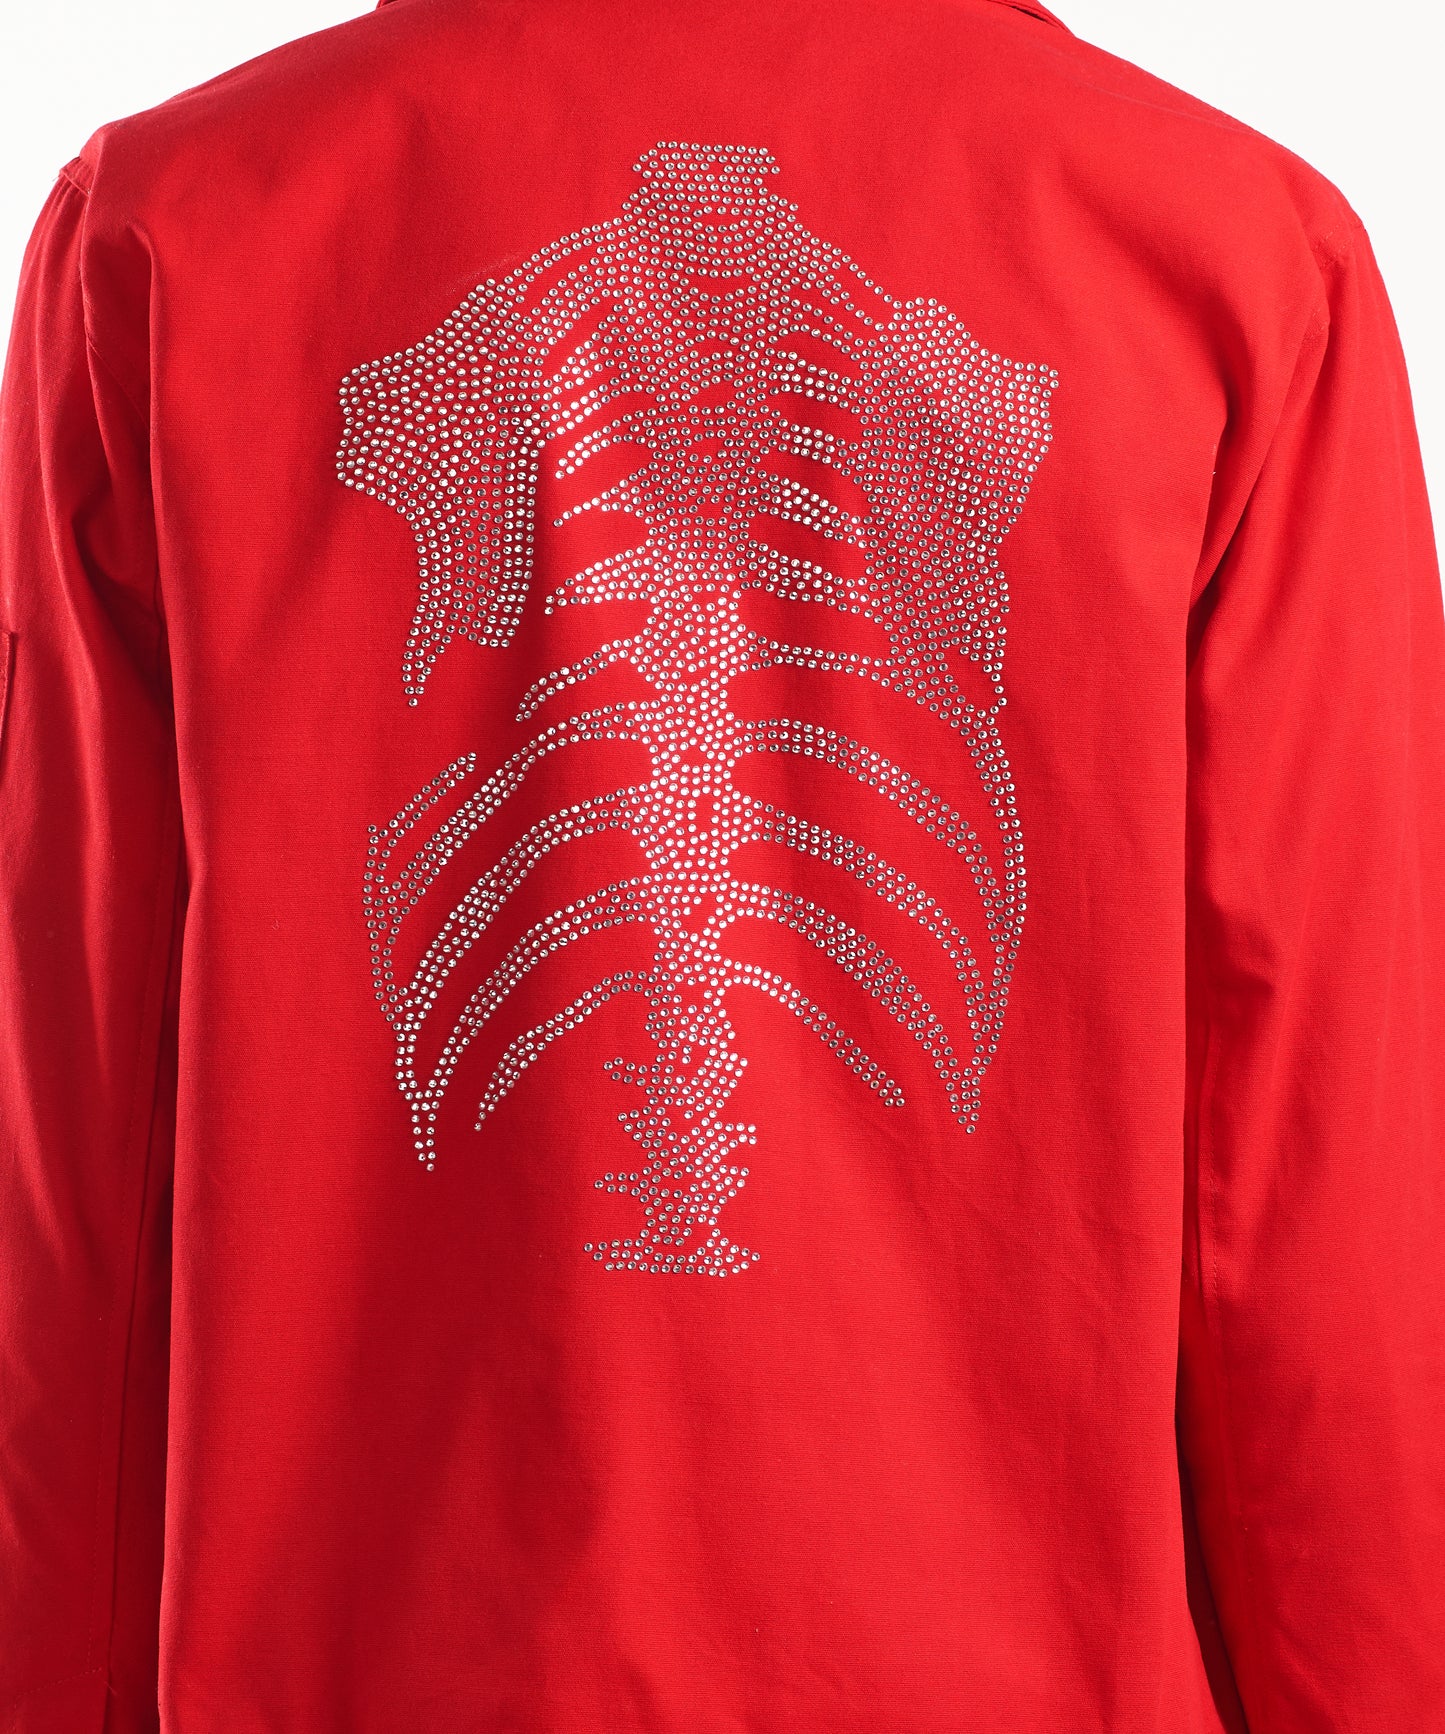 Bones Rhinestone Jacket - Red